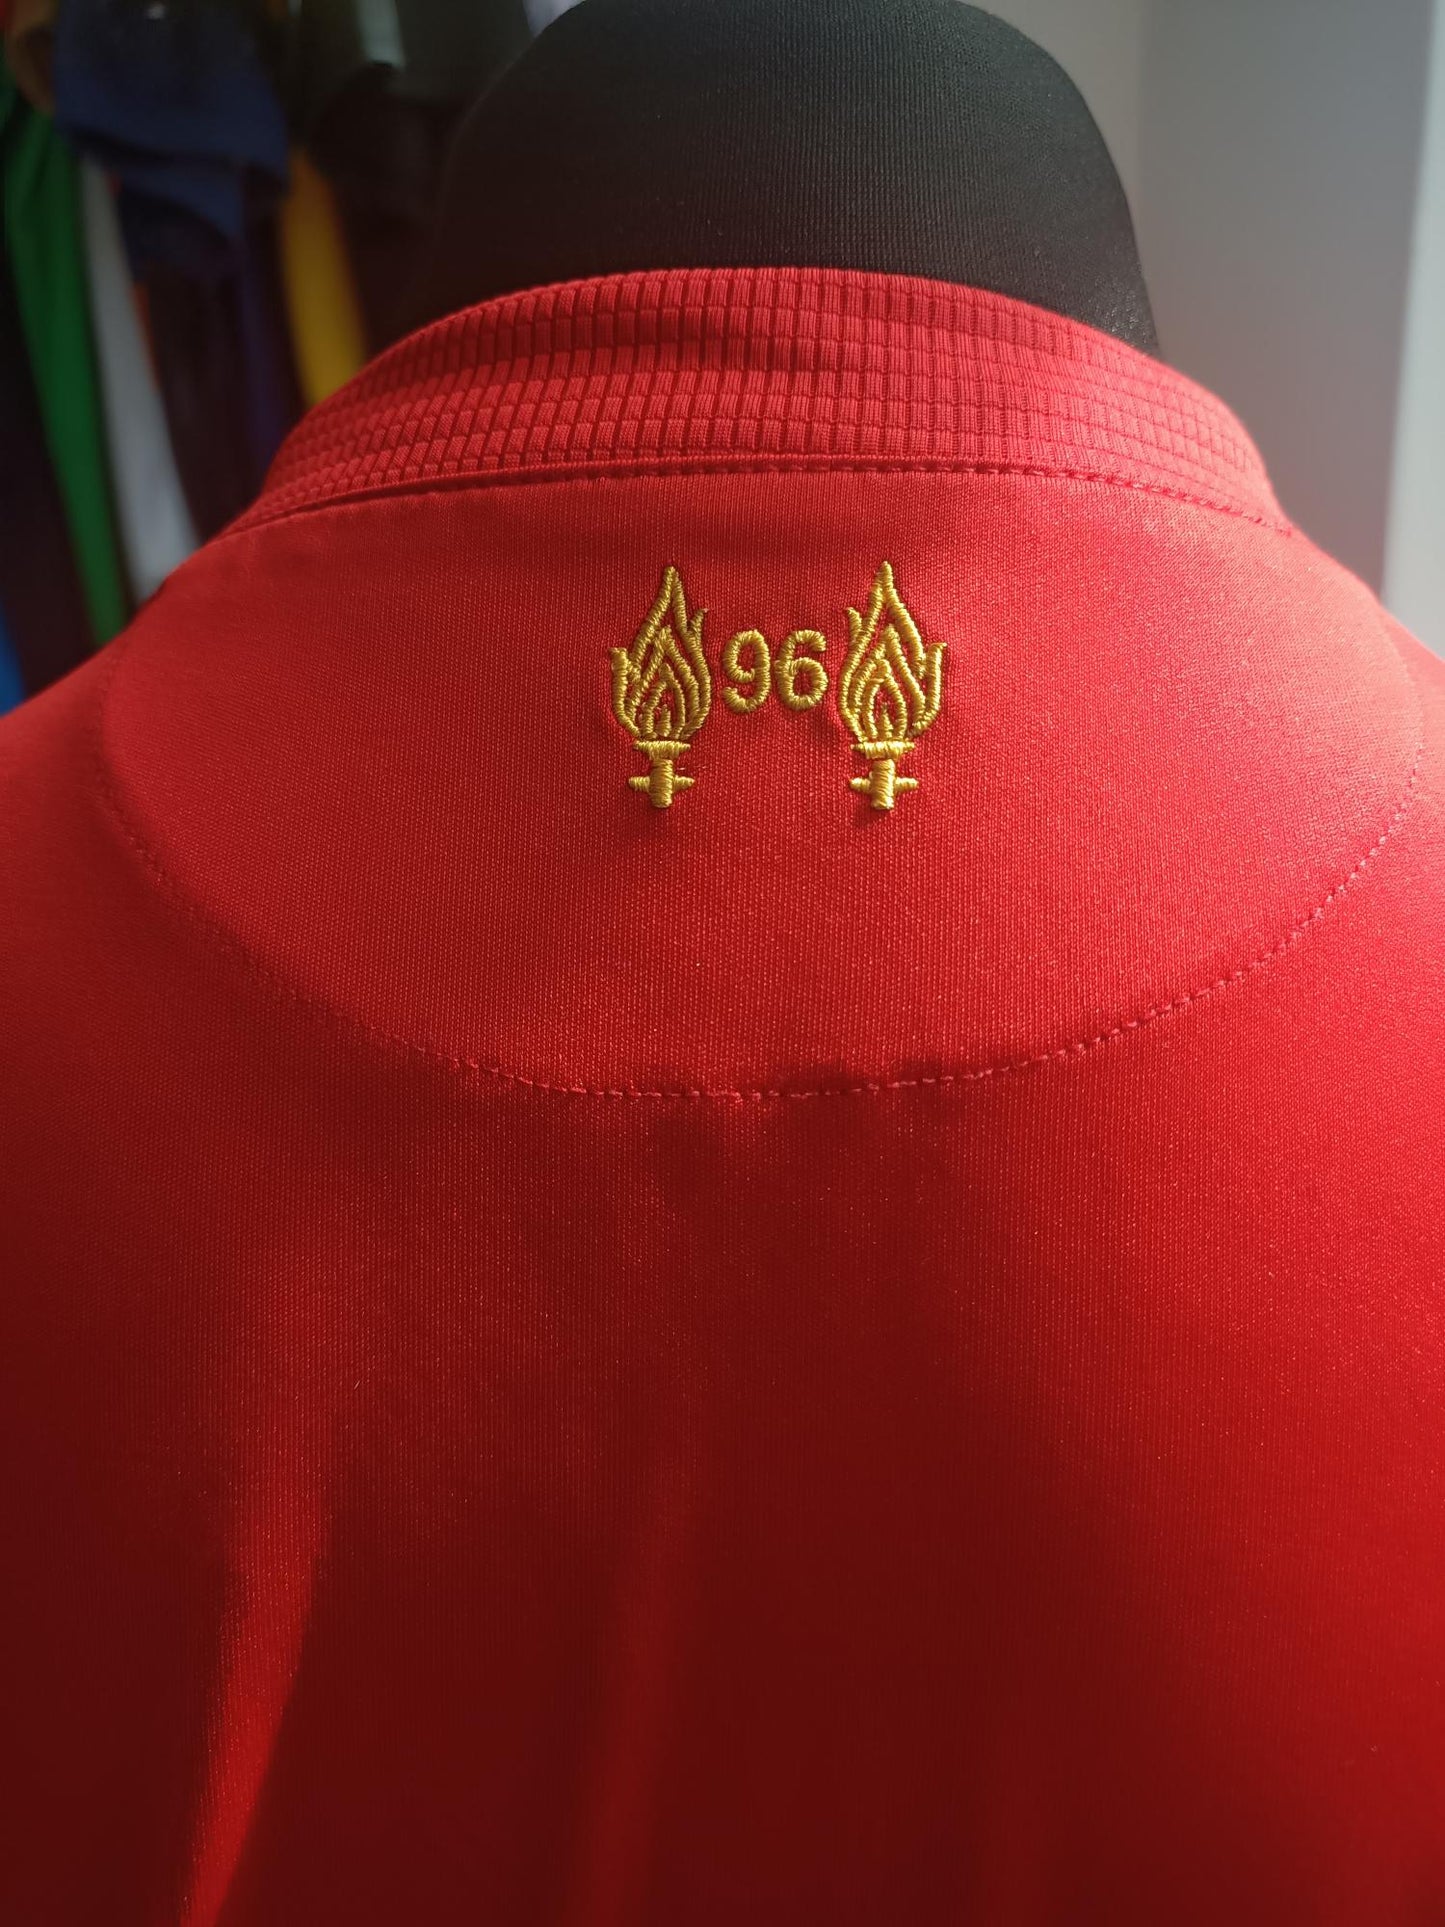 Liverpool 2015/2016 Home shirt used